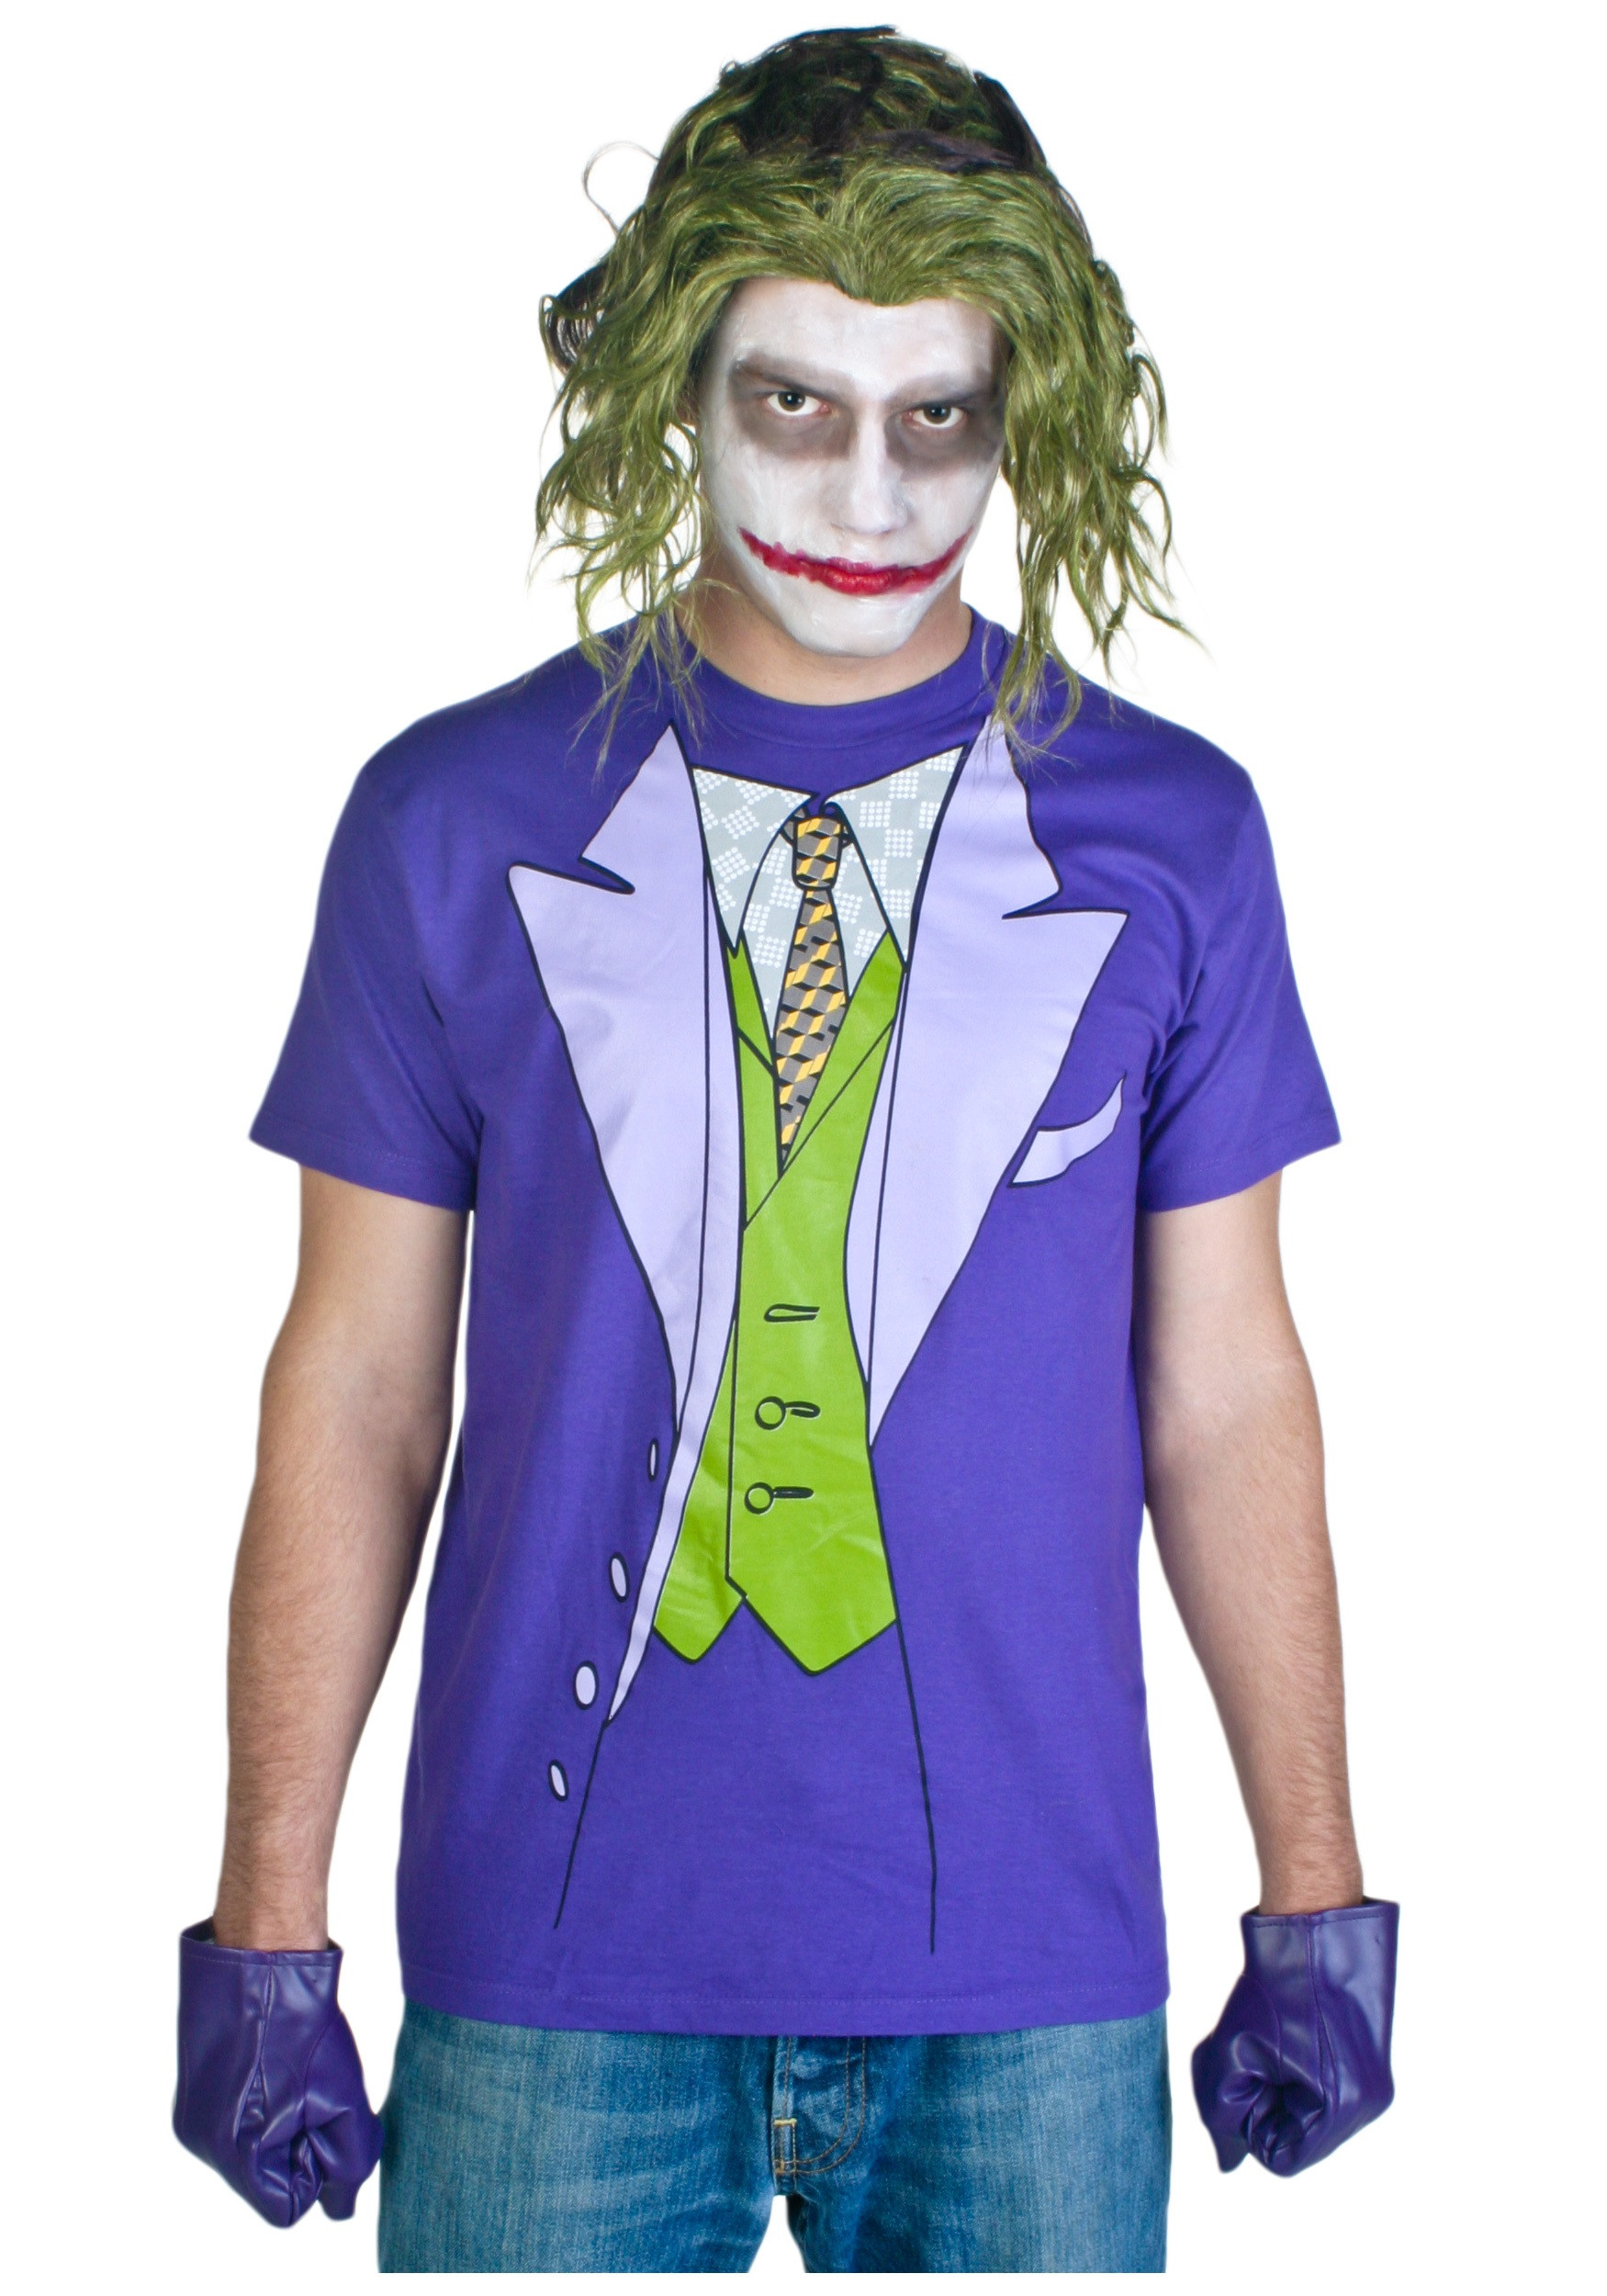 Best ideas about DIY Joker Costume Male
. Save or Pin Men s Joker Costume T Shirt Now.